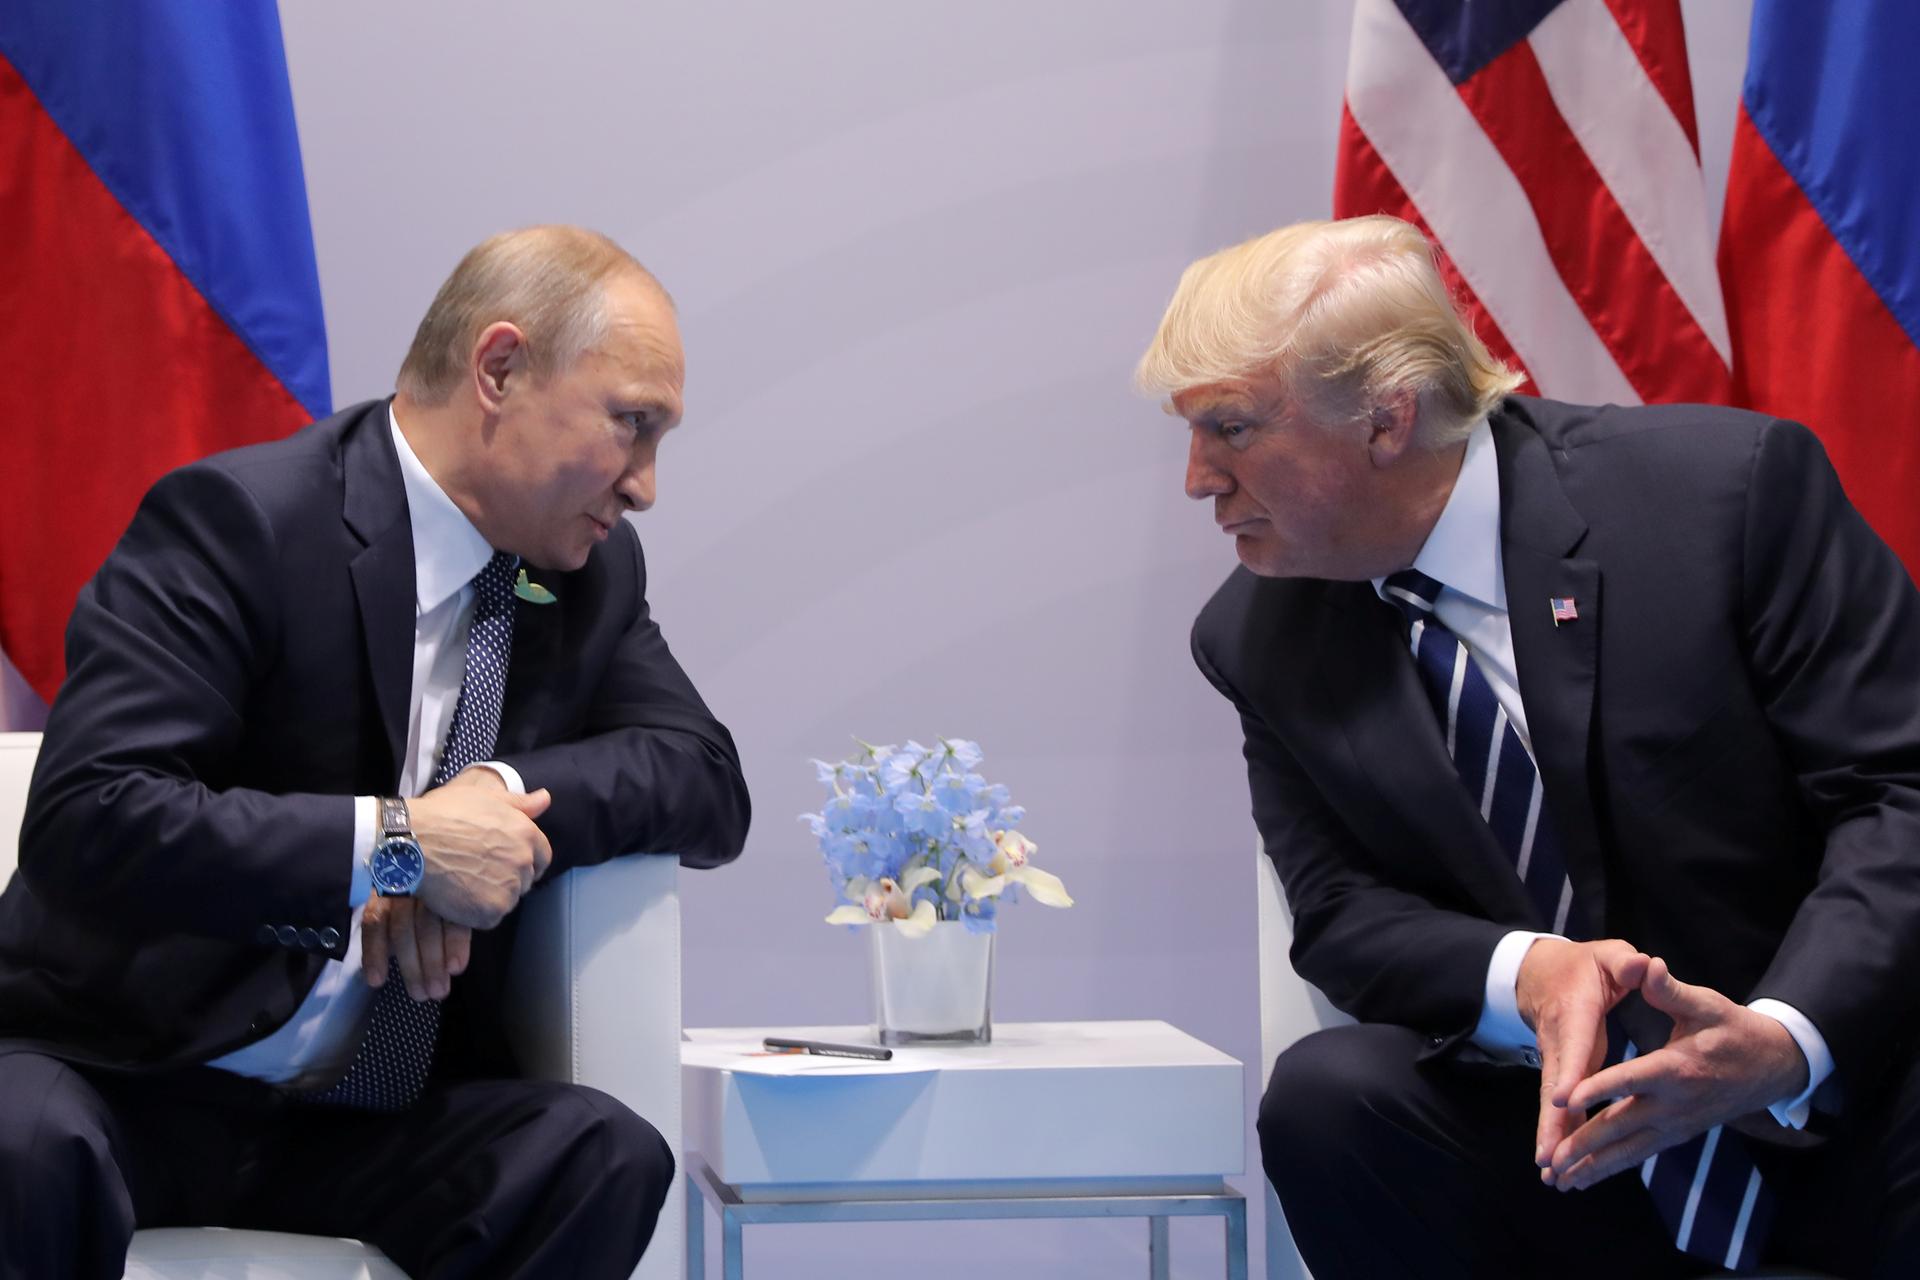 Russia's President Vladimir Putin talks to U.S. President Donald Trump during their bilateral meeting at the G20 summit in Hamburg.